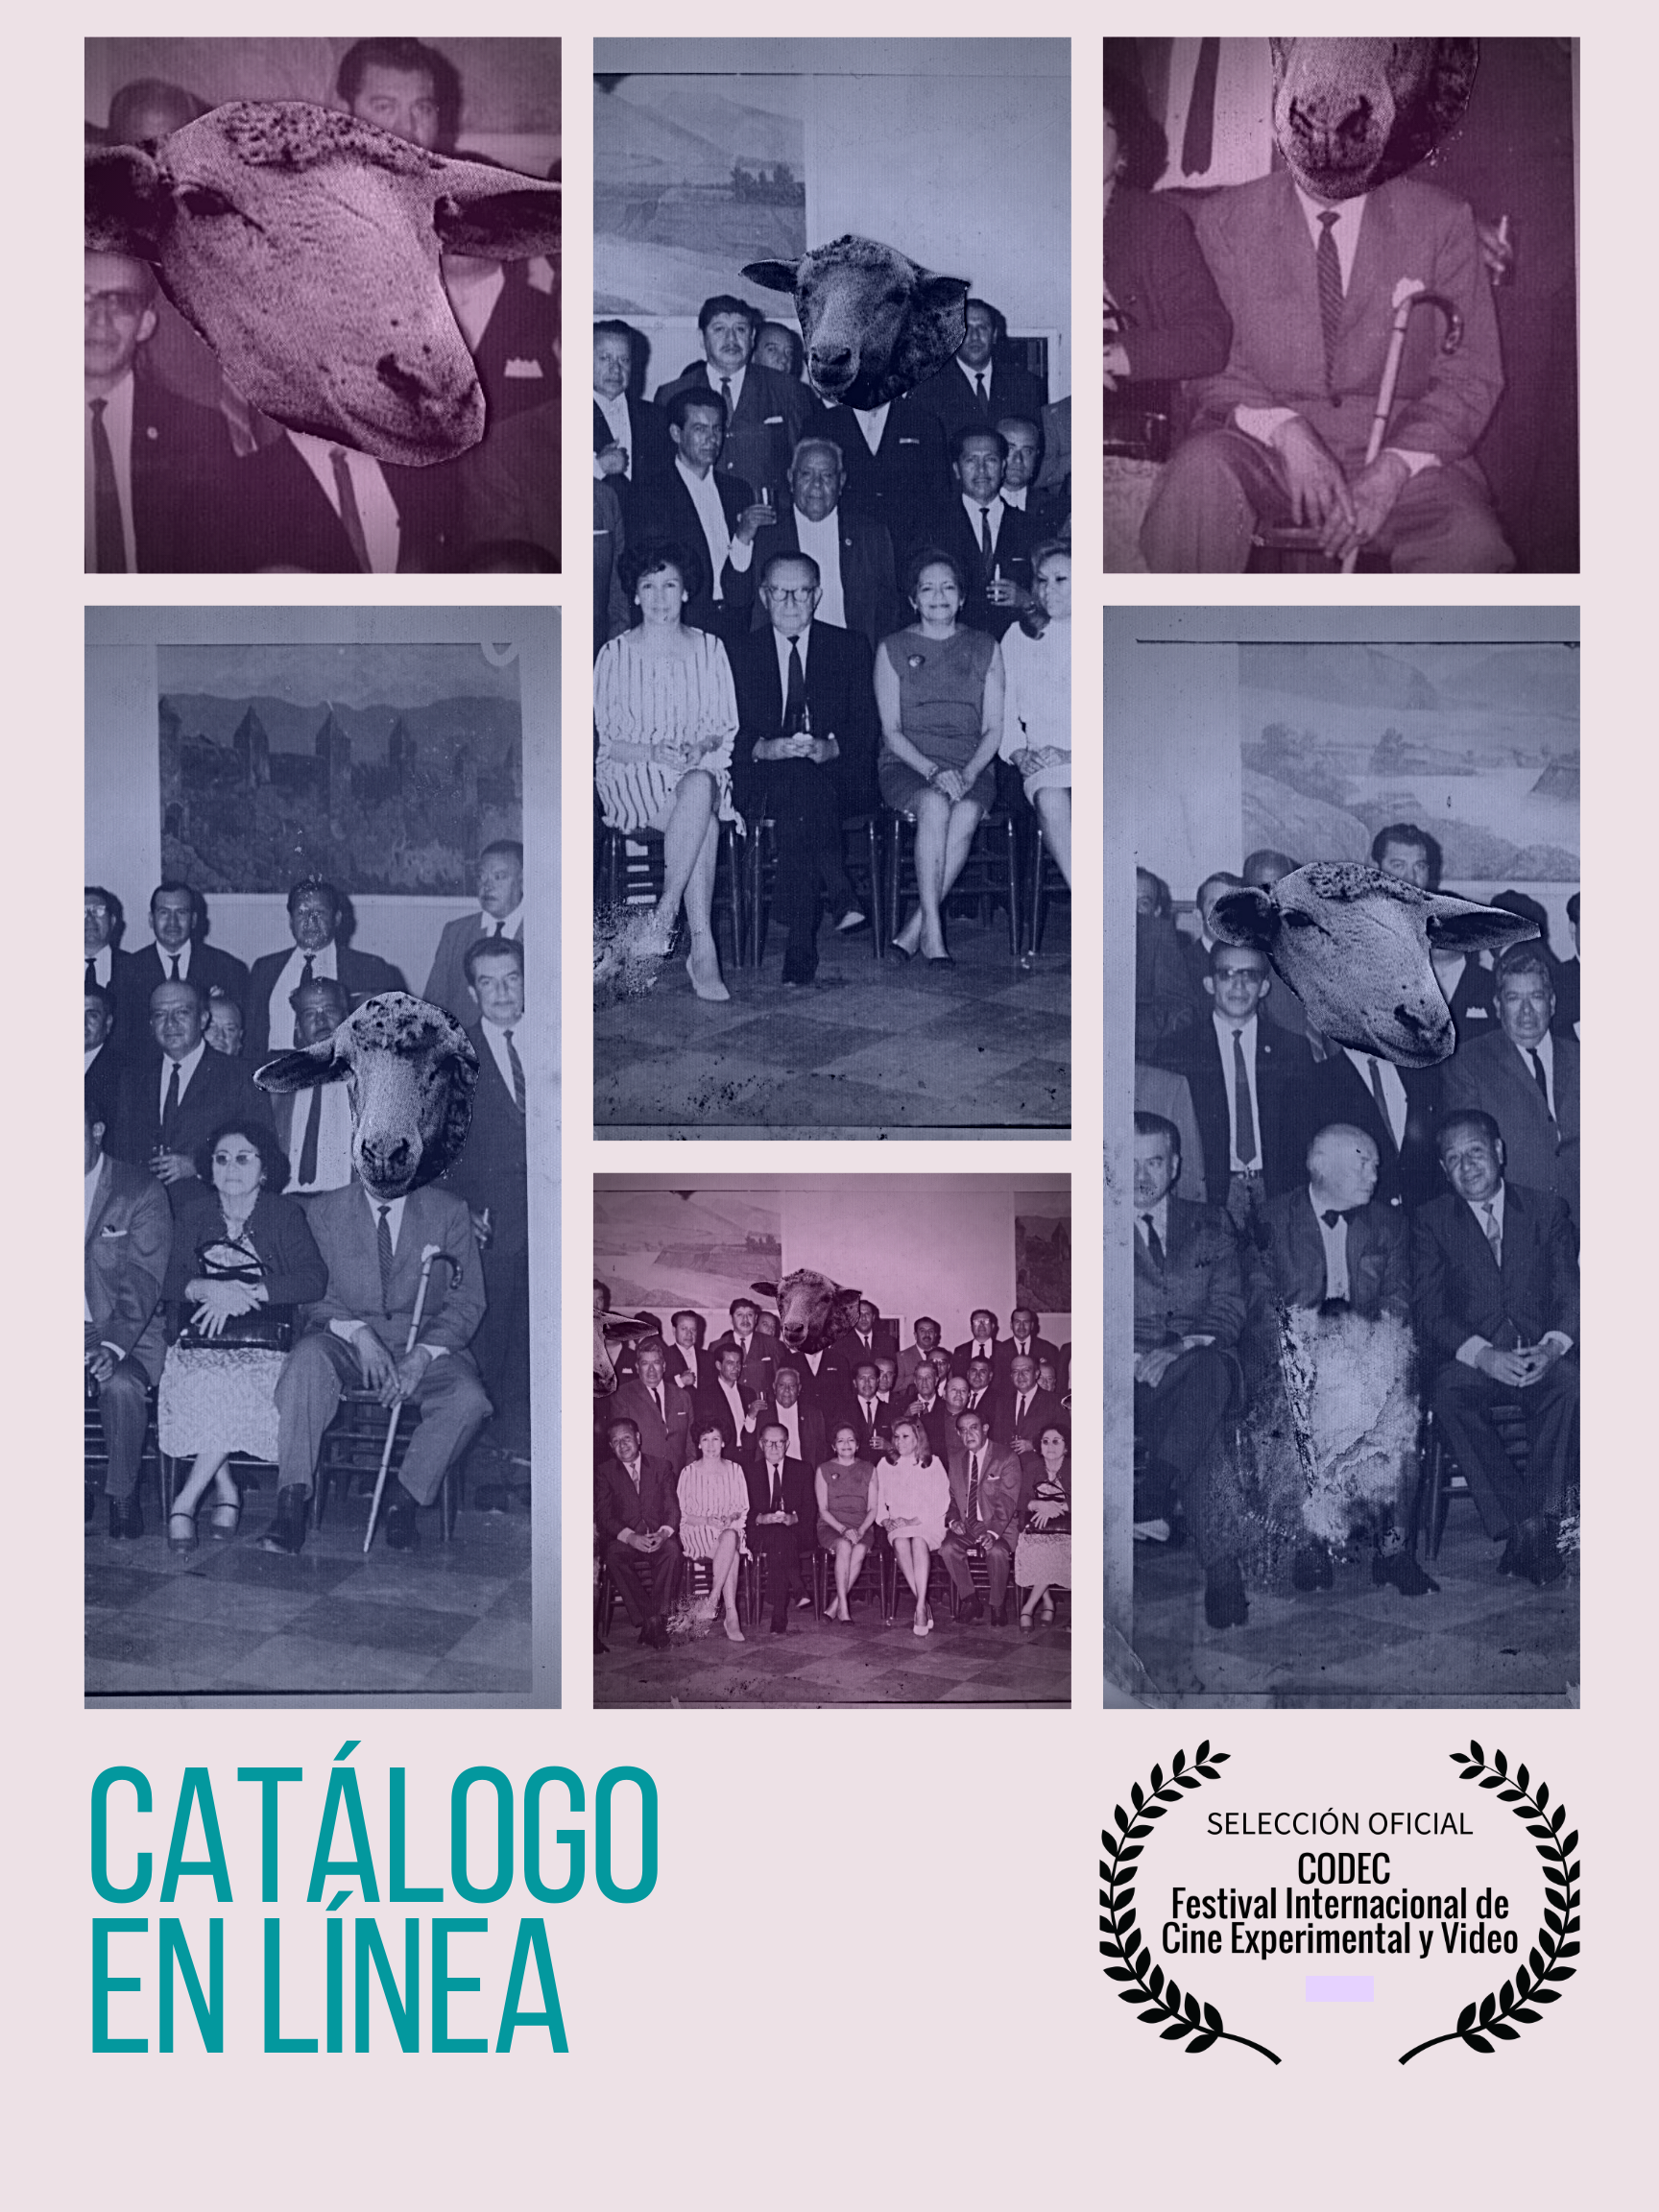 The Separation Loop @ the online Catalouge from the Festival Internacional de Cine Experimental Y Video